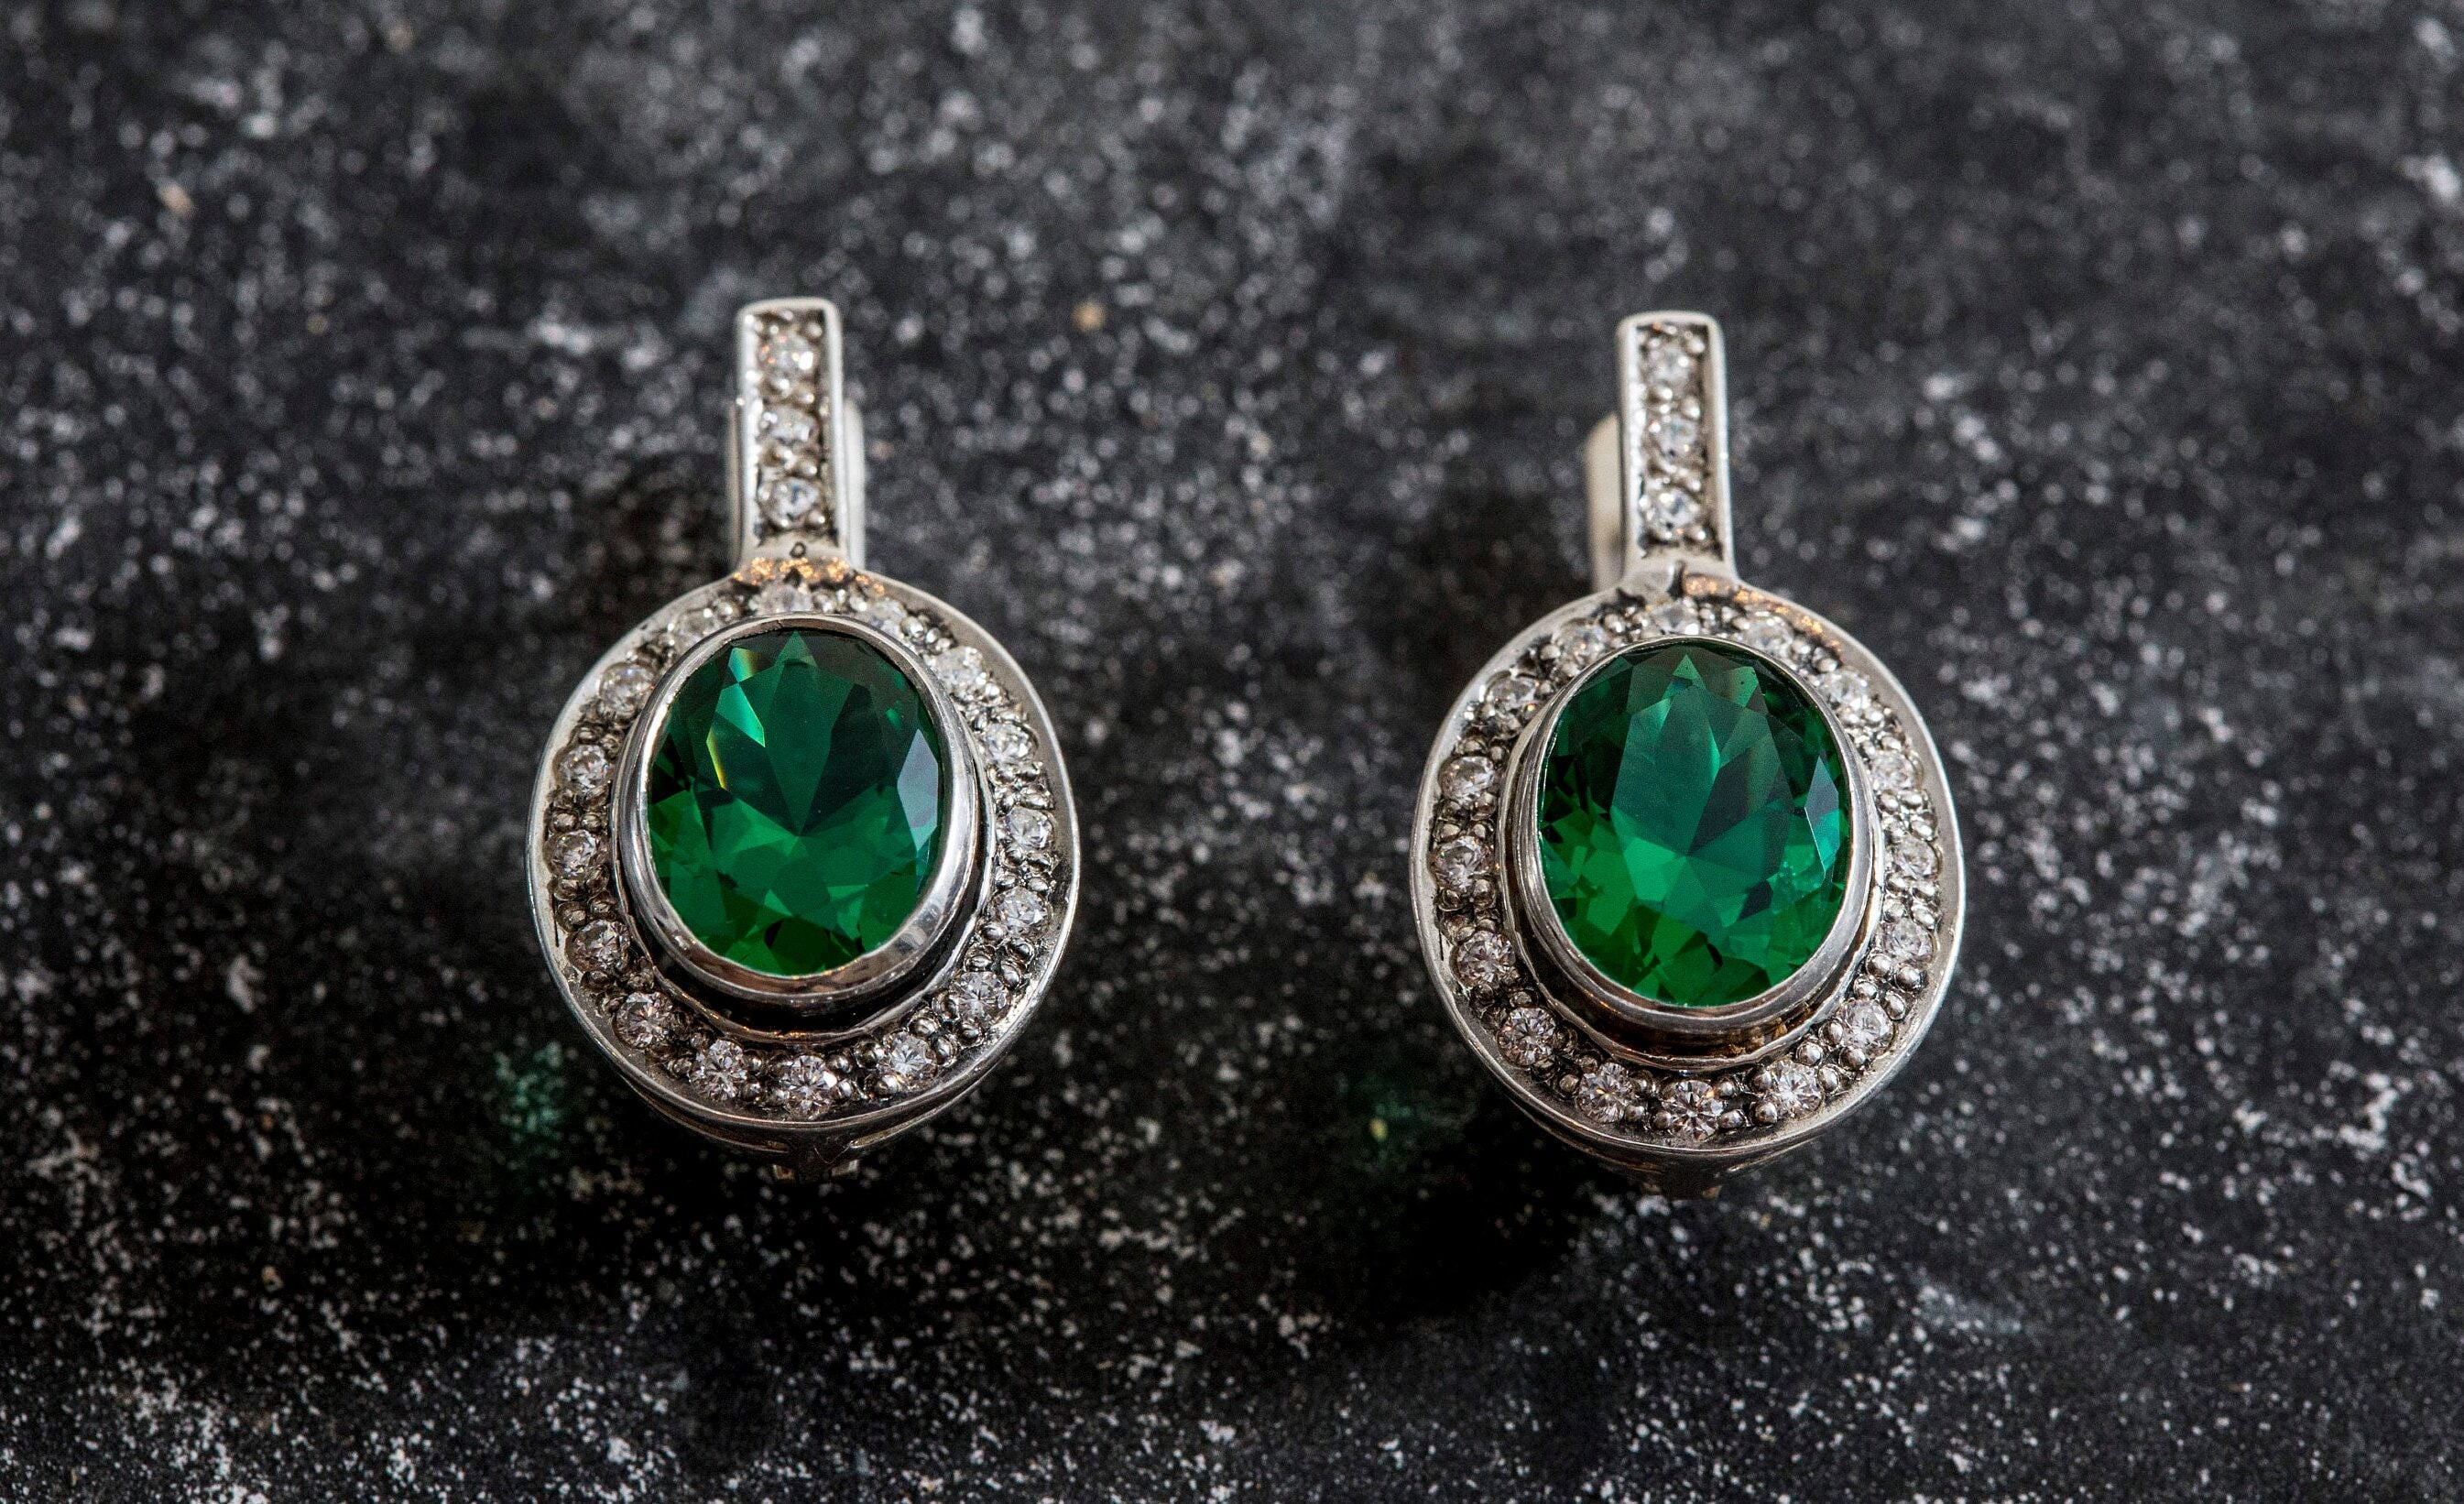 Emerald Earrings, Created Emerald, Vintage Earrings, Antique Emerald Earrings, Green Emerald Earrings, 925 Silver Earrings, Green Earrings